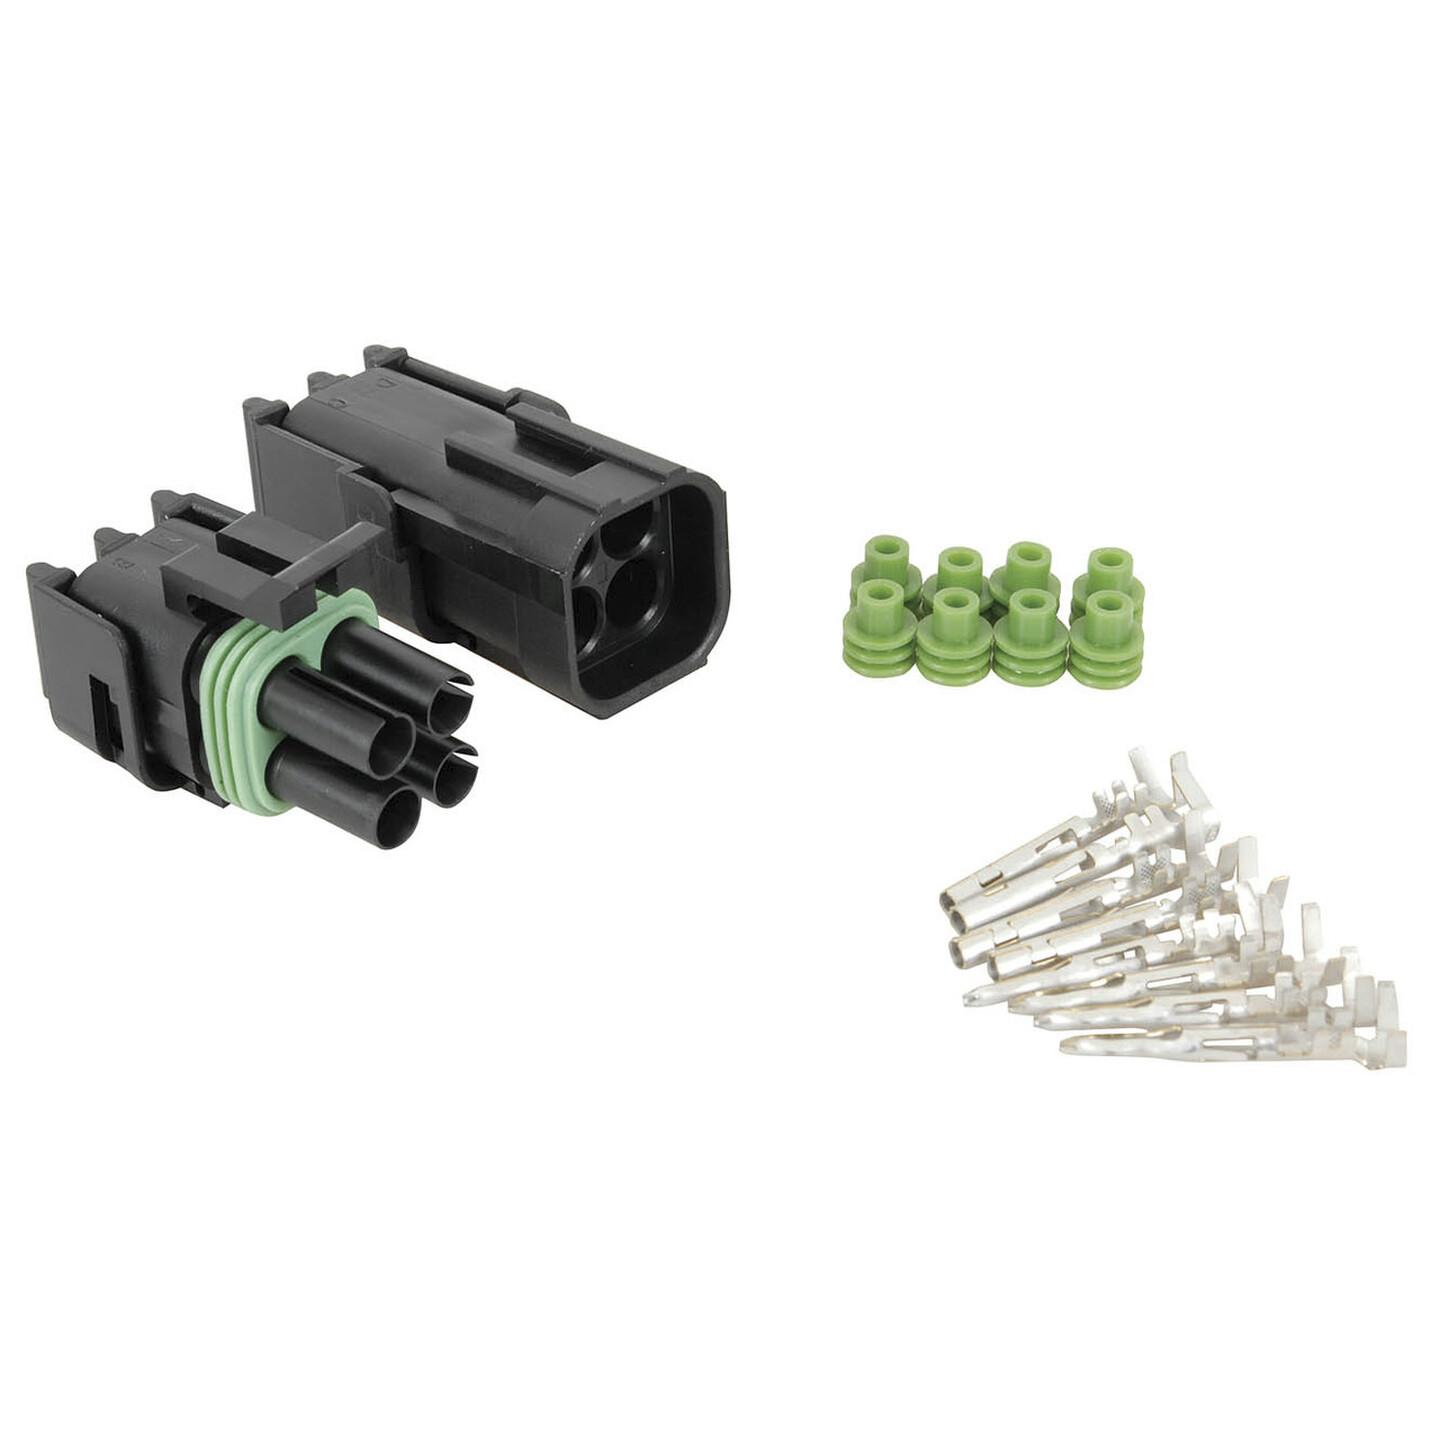 Automotive Waterproof JR Plug and Socket Set - 4 way